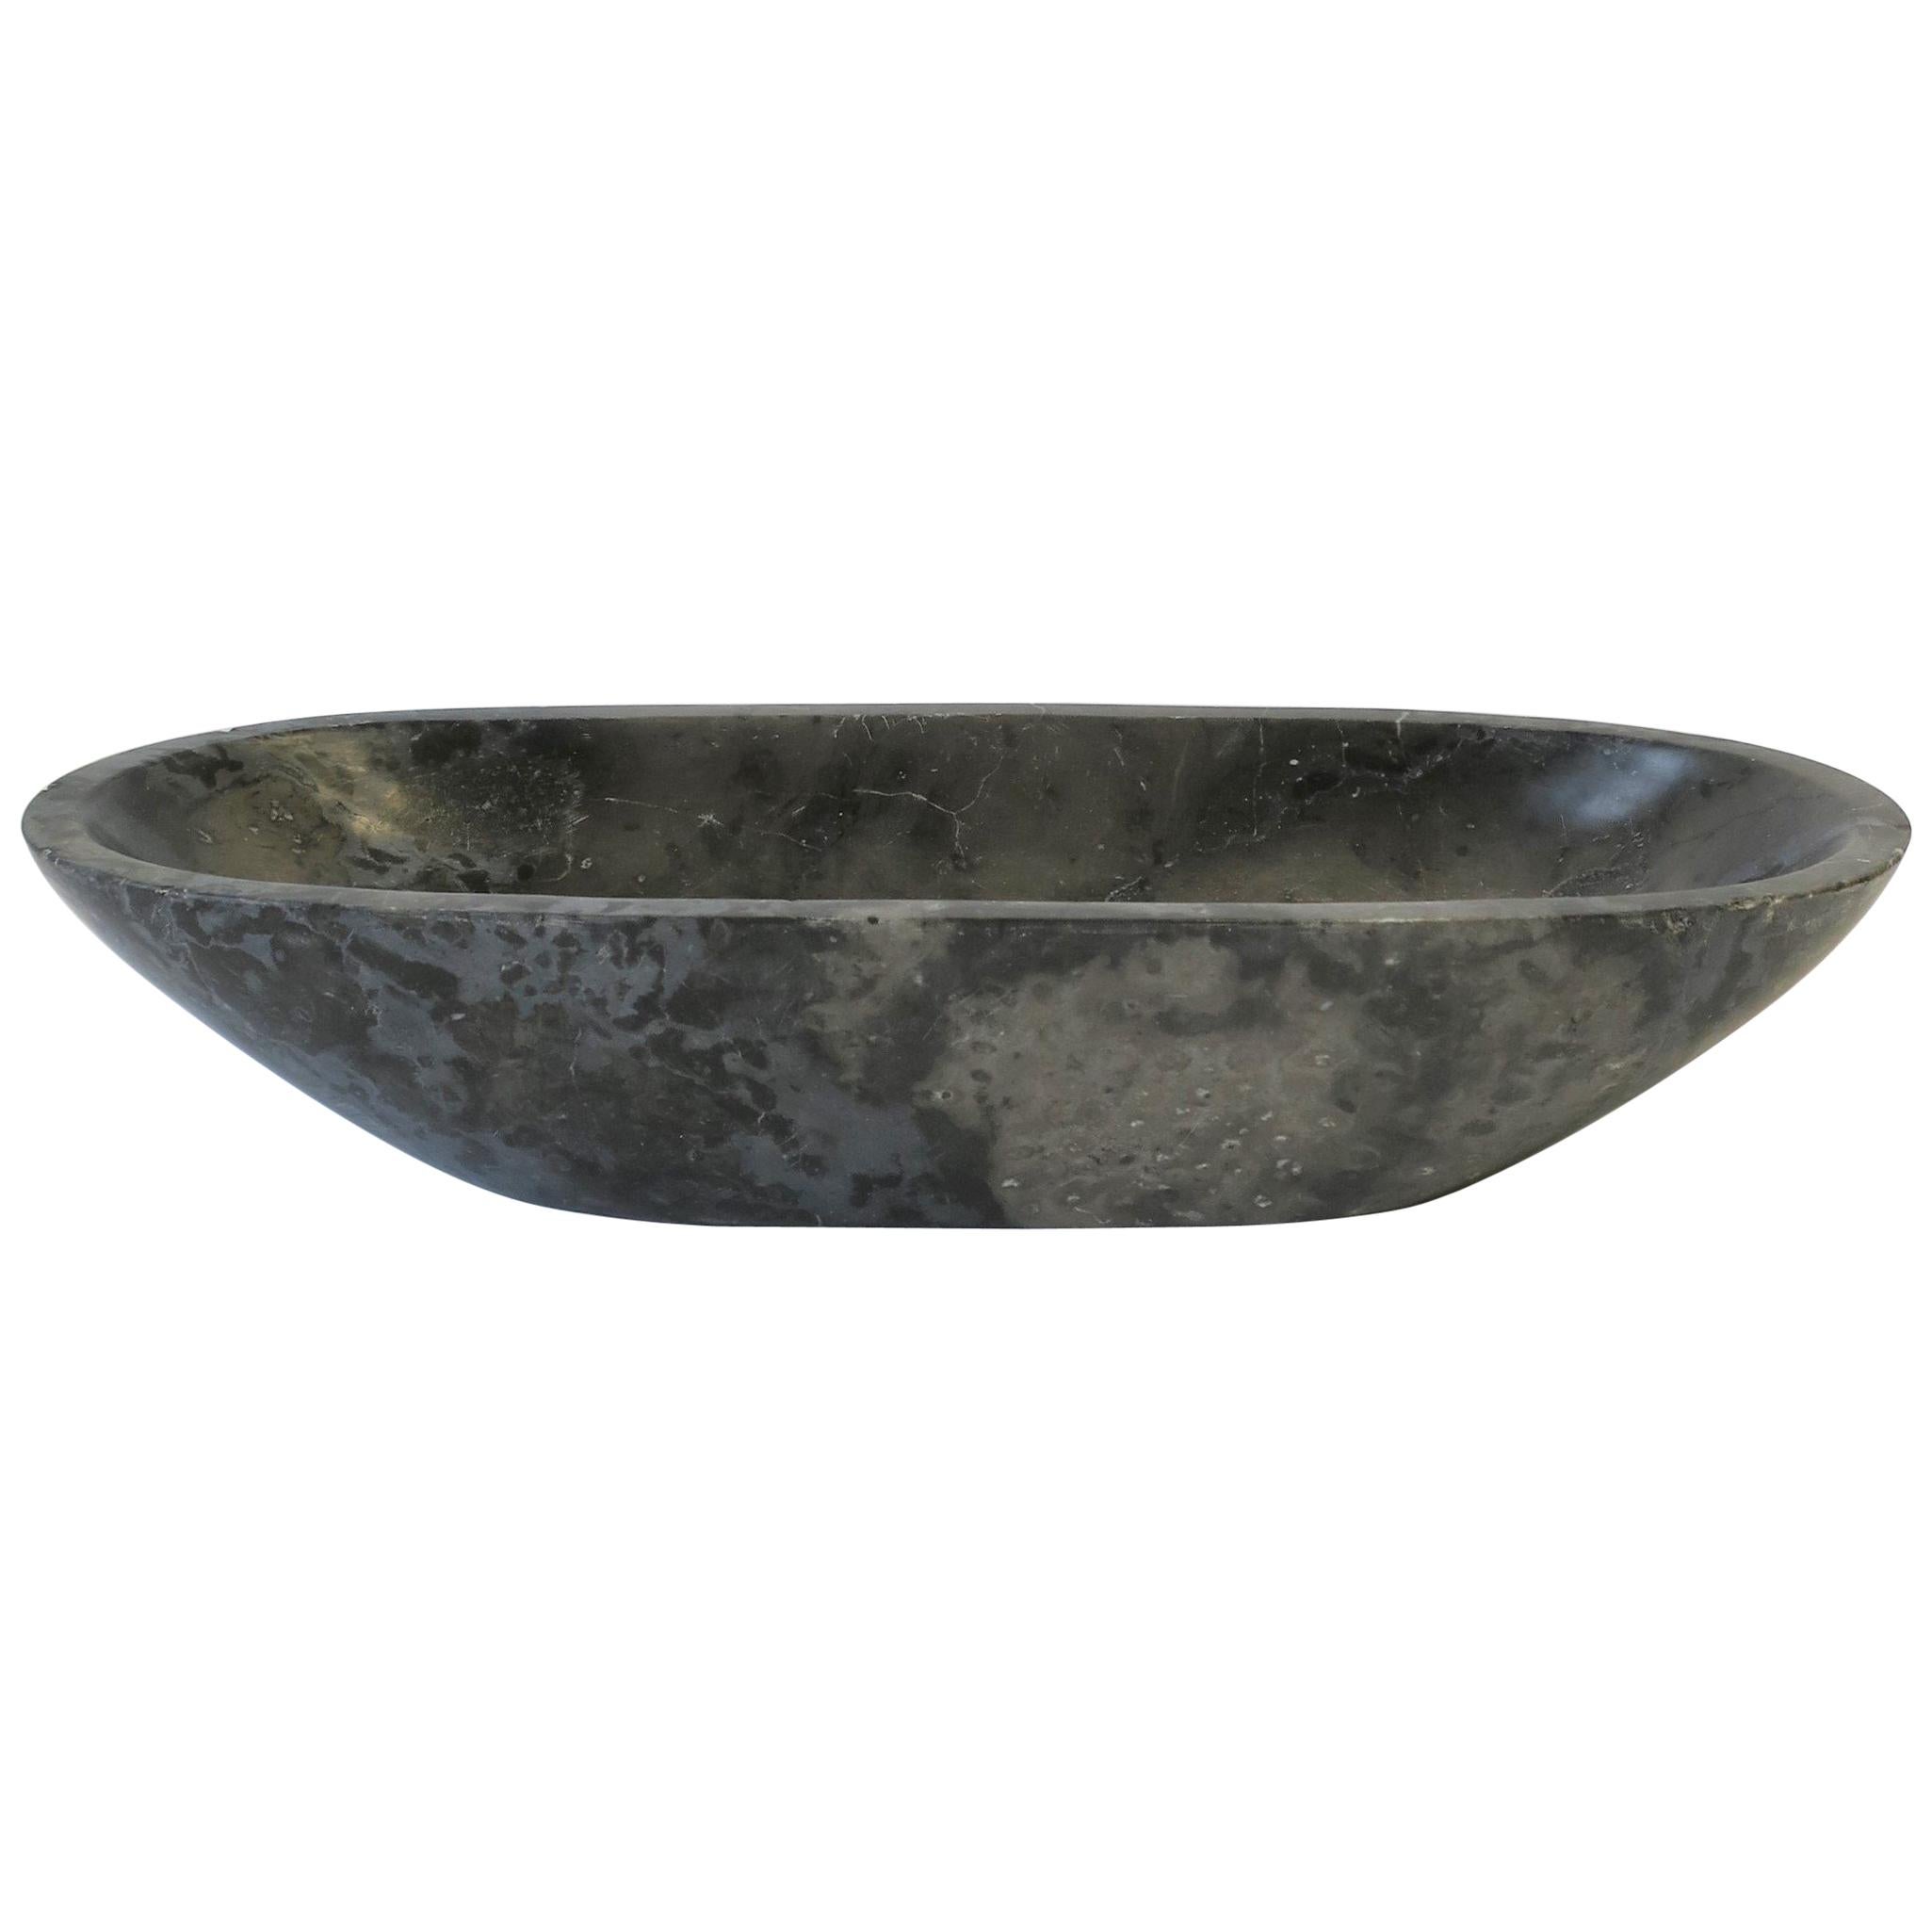 Stone Oblong Bowl or Vide-Poche